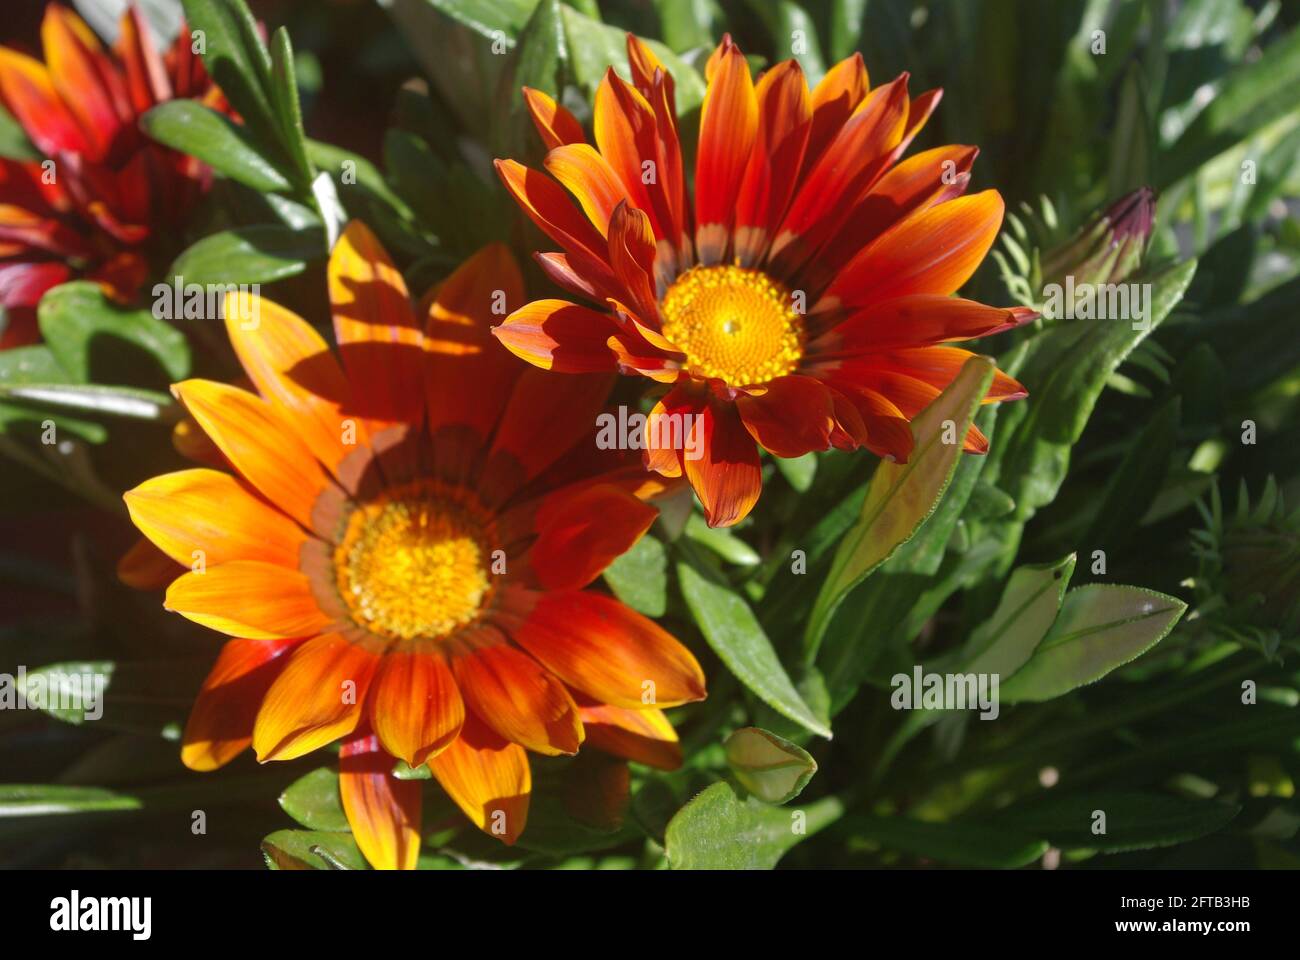 Gazania rigens, treasure flowers is a more common name. Stock Photo